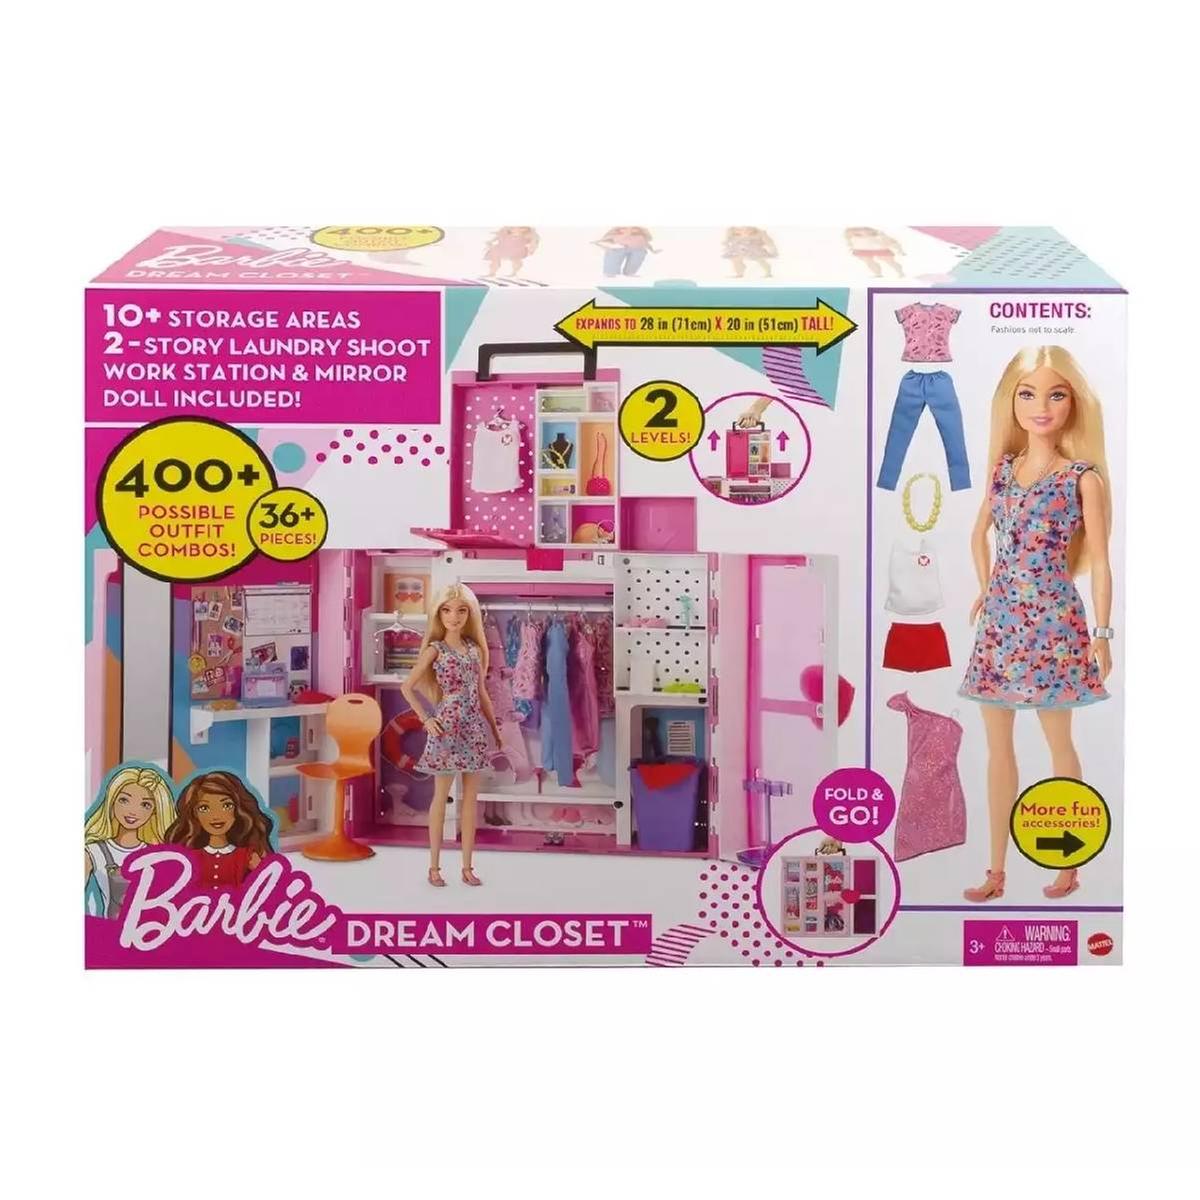 Guarda-Roupa Portátil Barbie - Mattel - Bonecas - Compra na